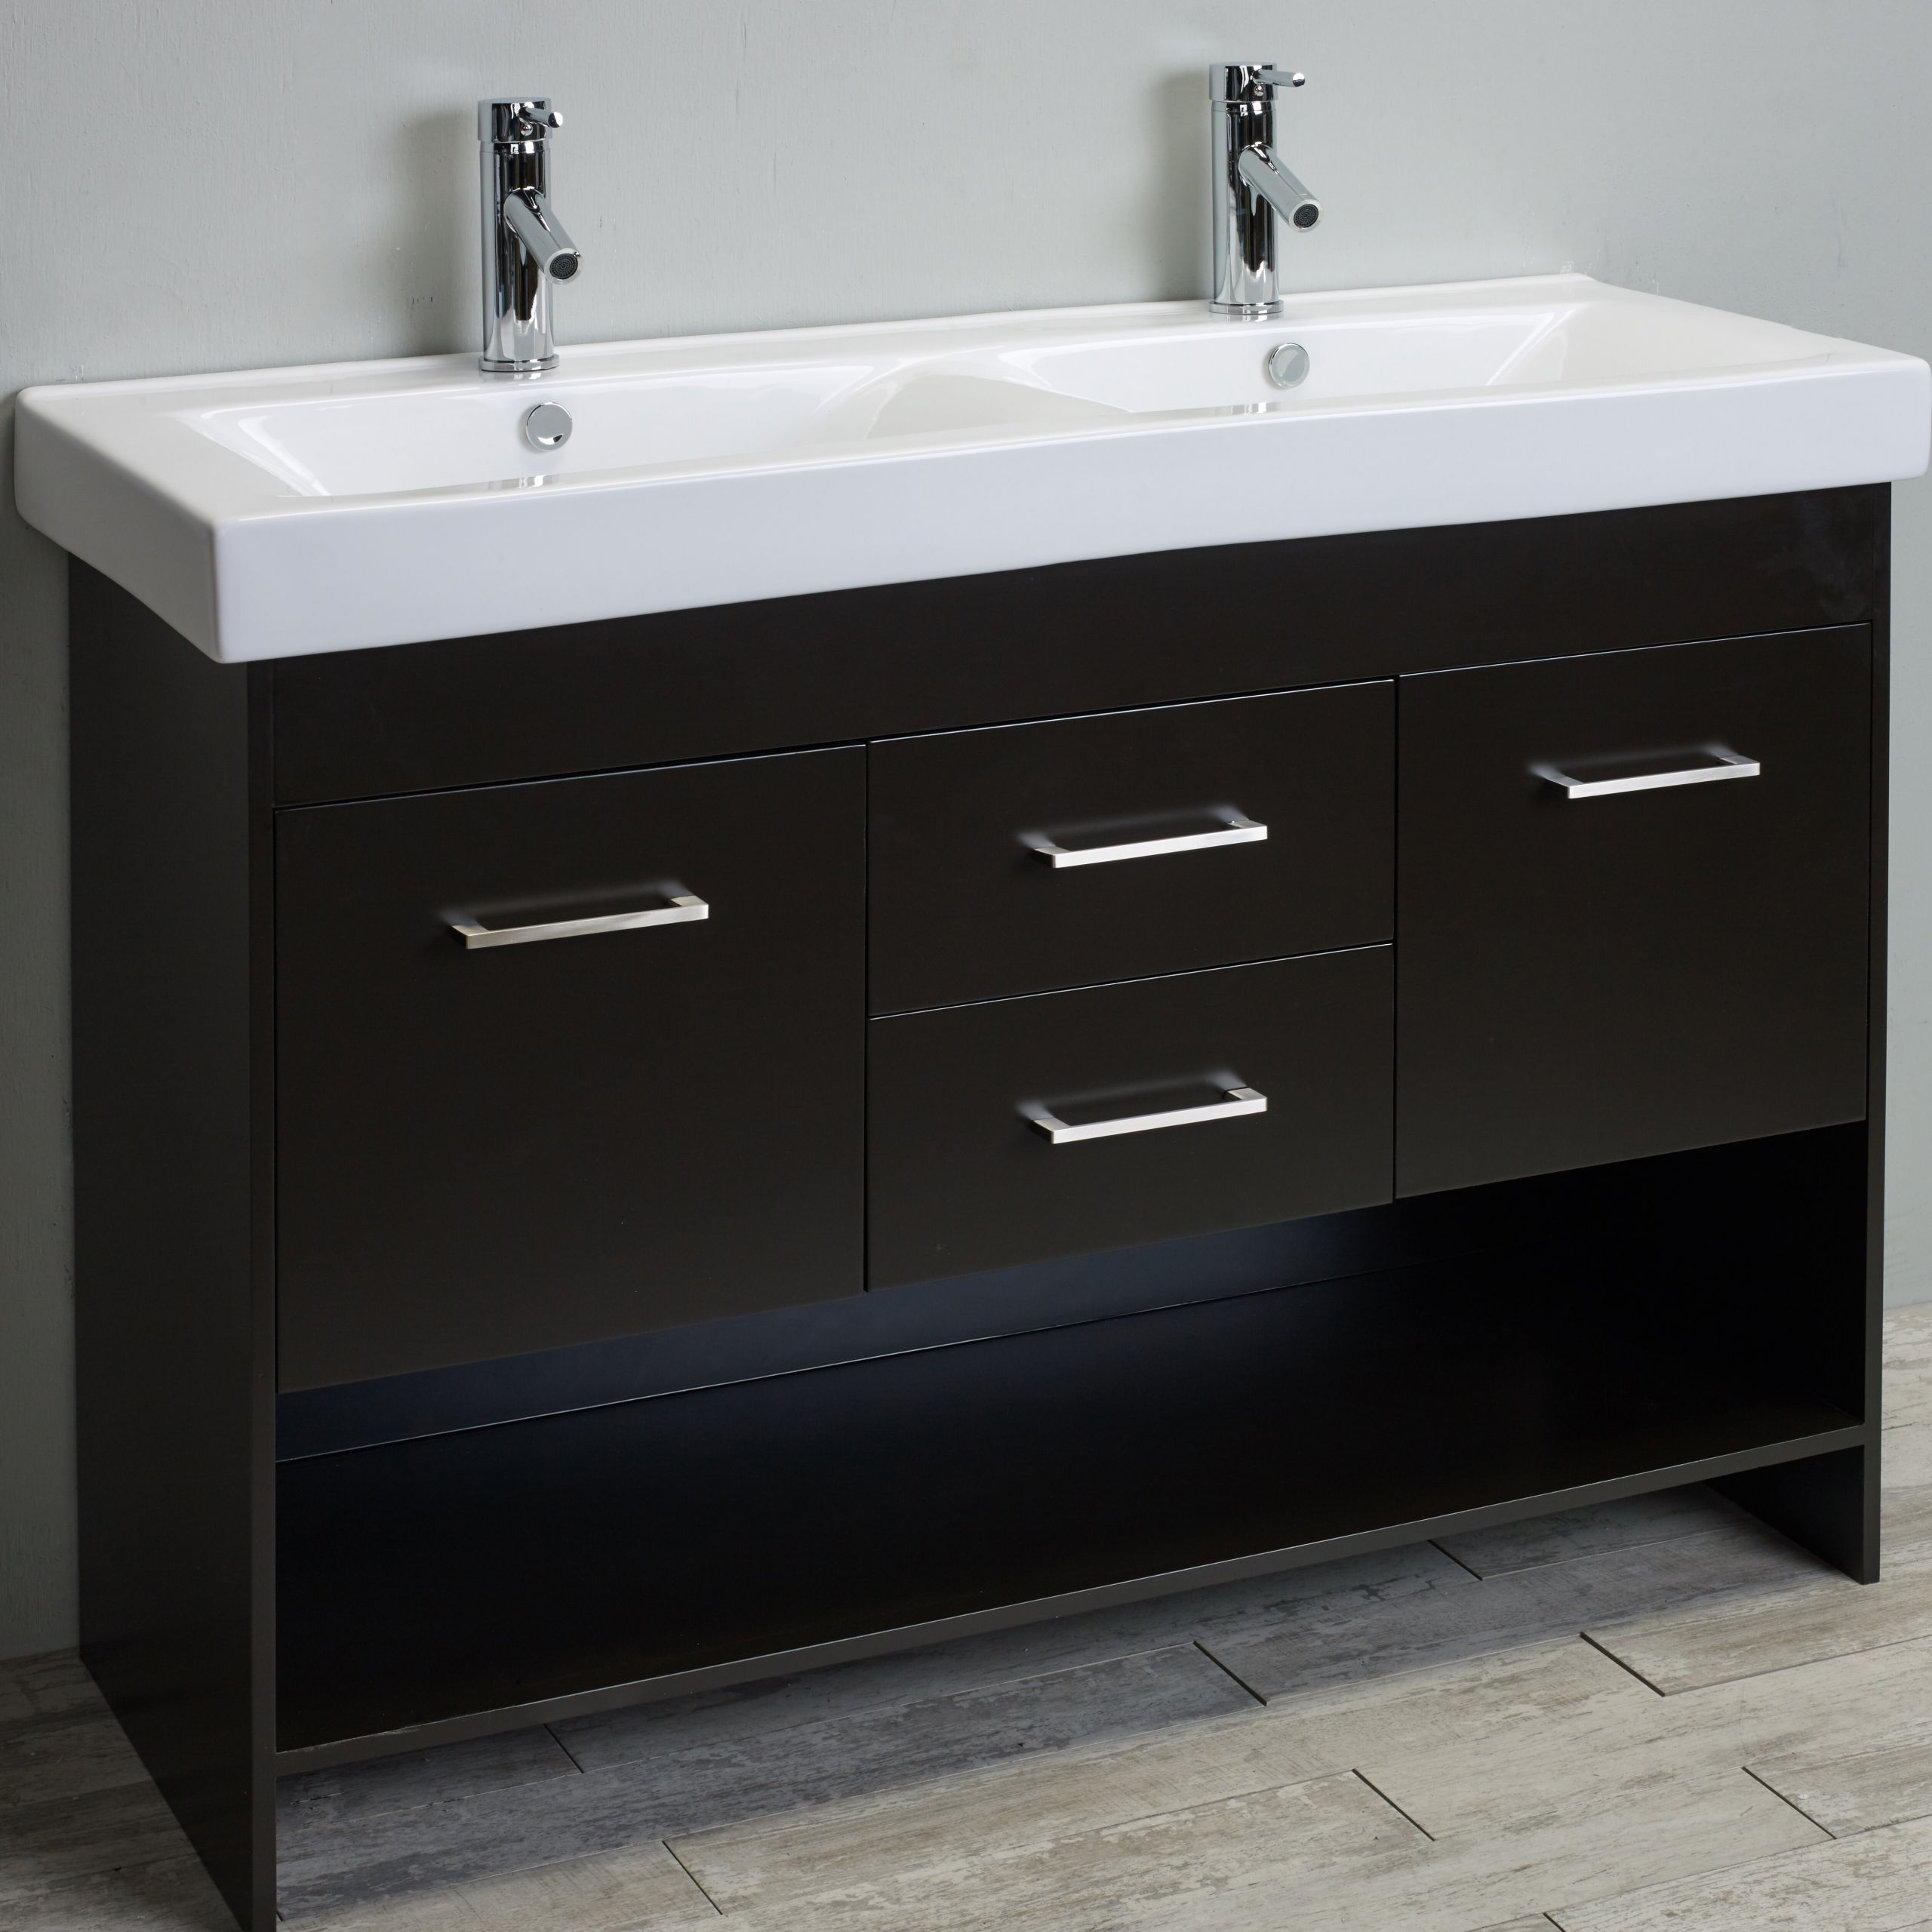 Integrated Bathroom Sink
 Eviva Gloria 48" Espresso Double Bathroom Vanity Set with